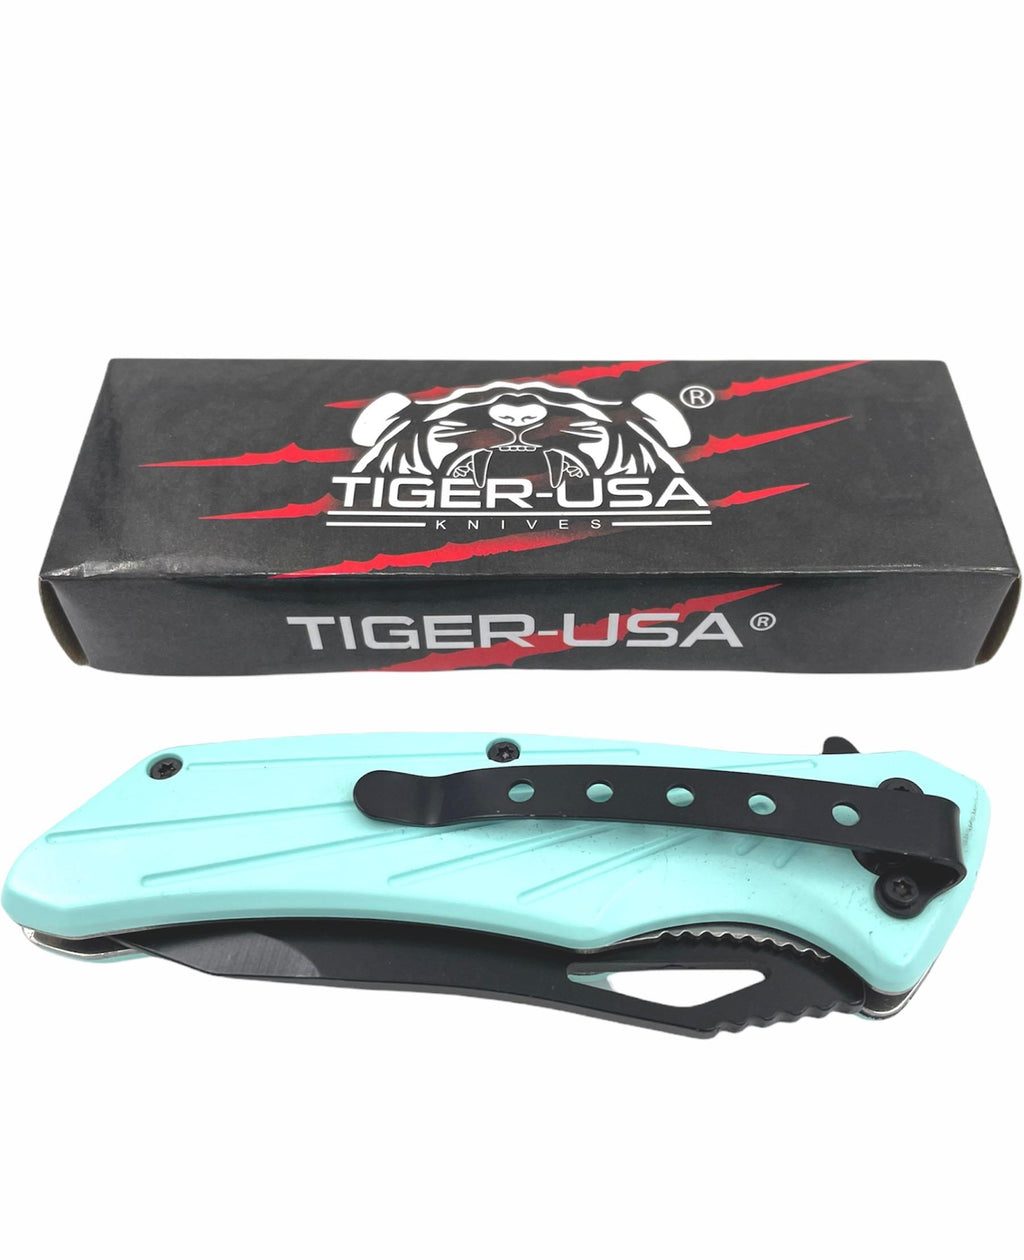 Tiger USA Spring Action KnifeTEAL  Tanto